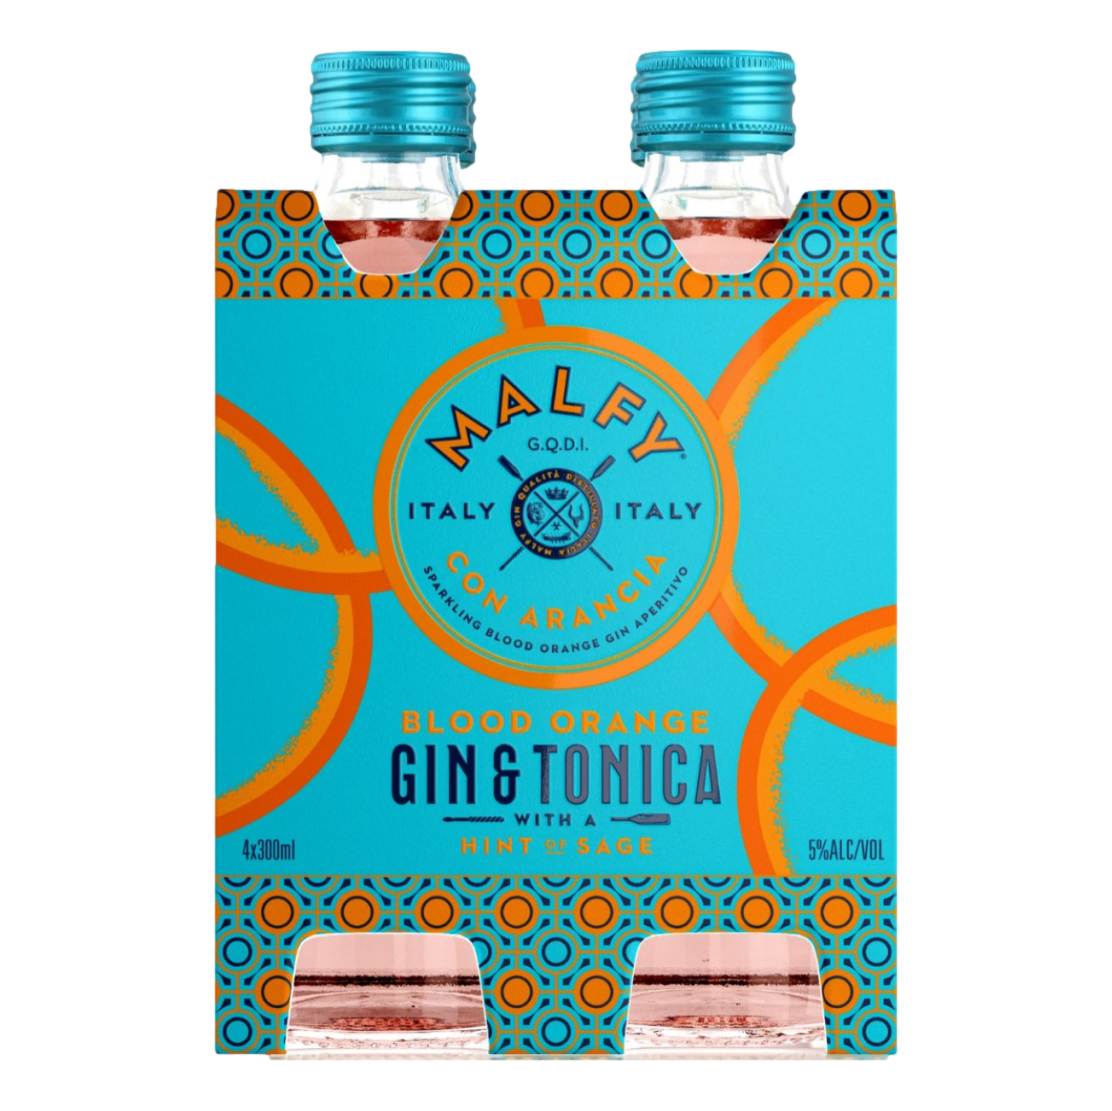 Malfy Arancia Blood Orange Gin & Tonica 300ml Bottle 4 Pack